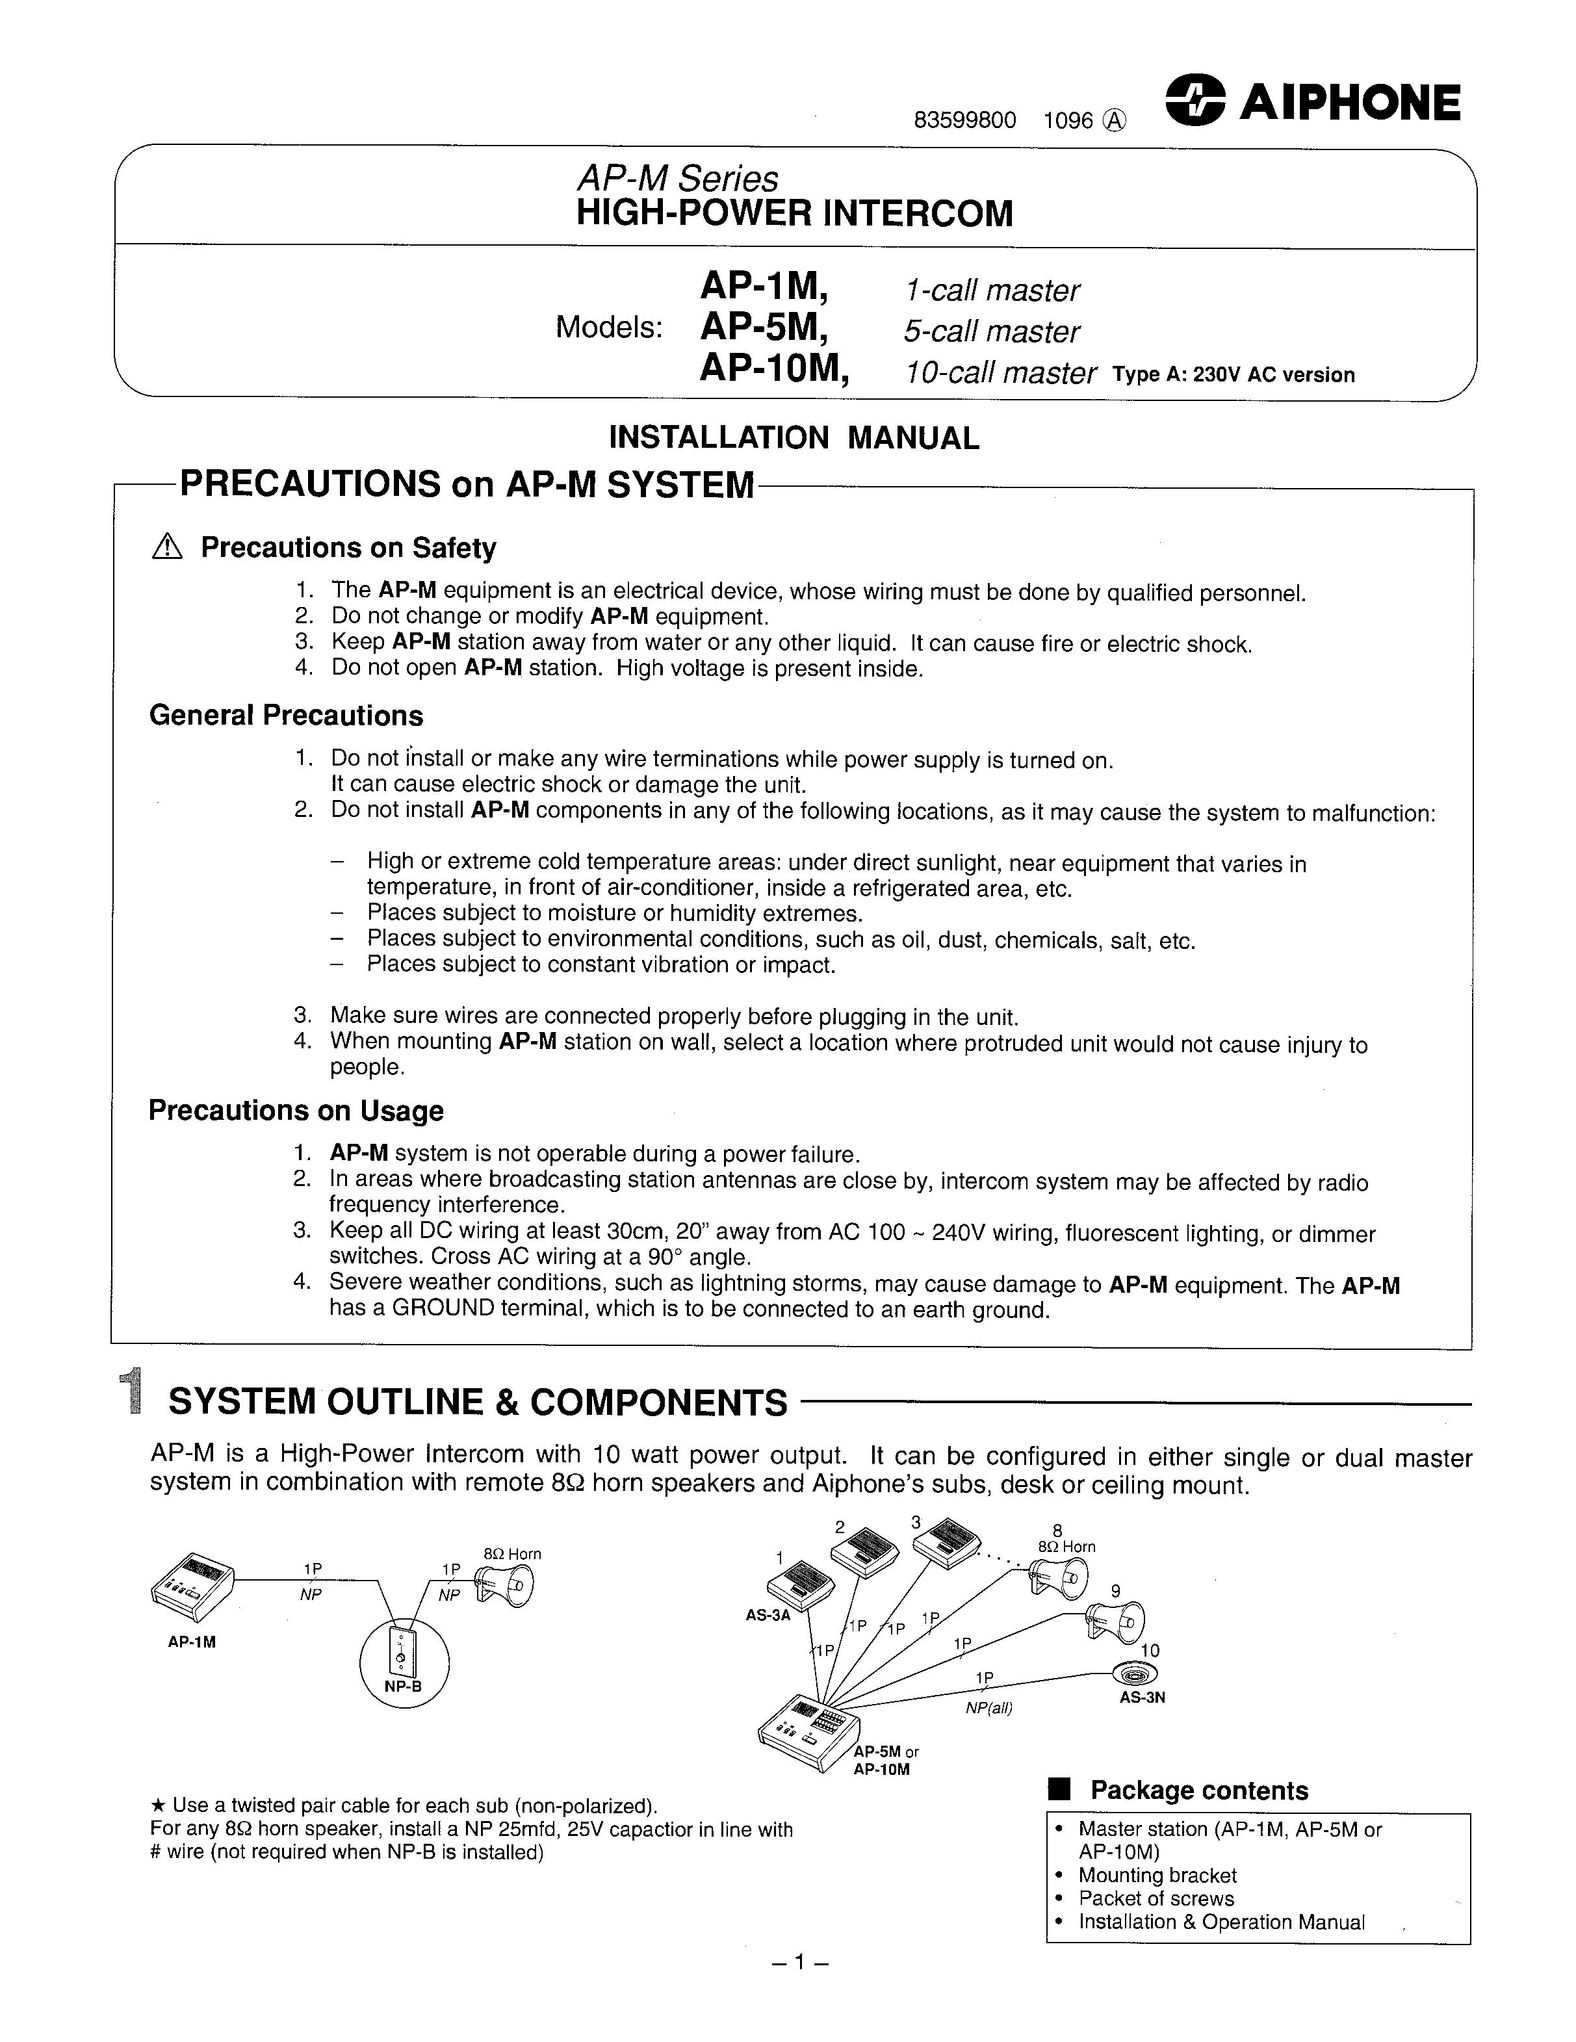 Aiphone AP-5M Intercom System User Manual